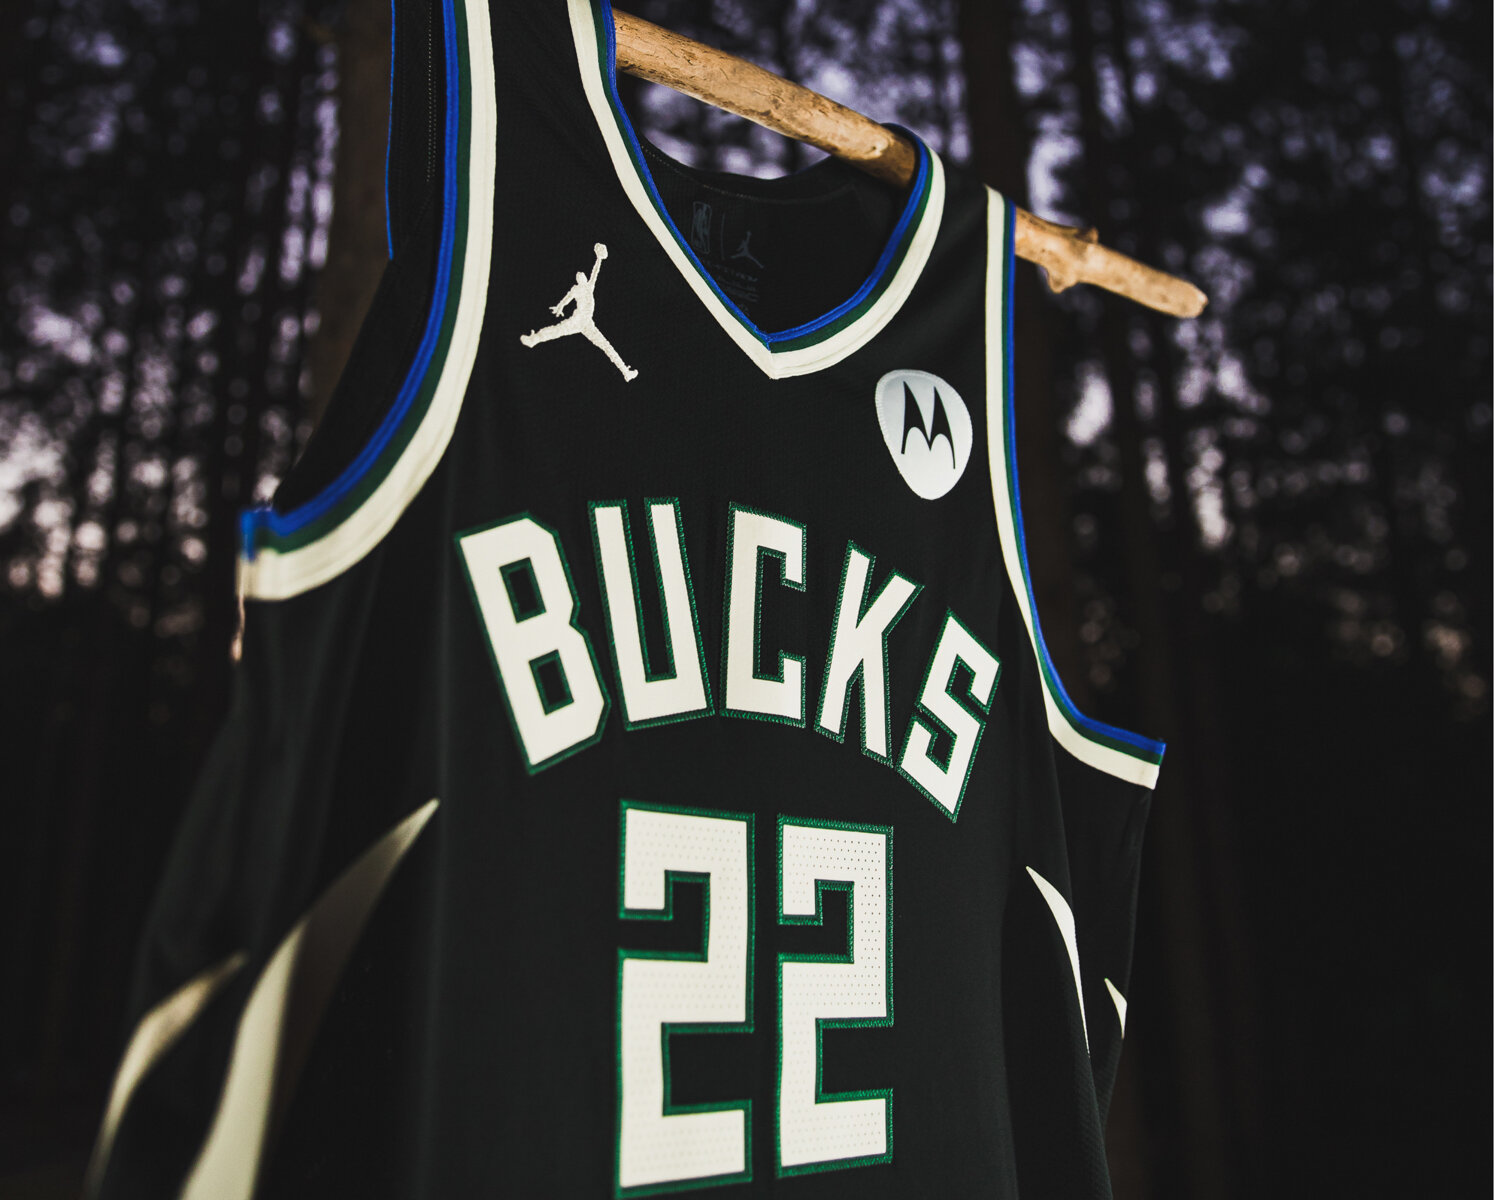 Bucks' new uniform